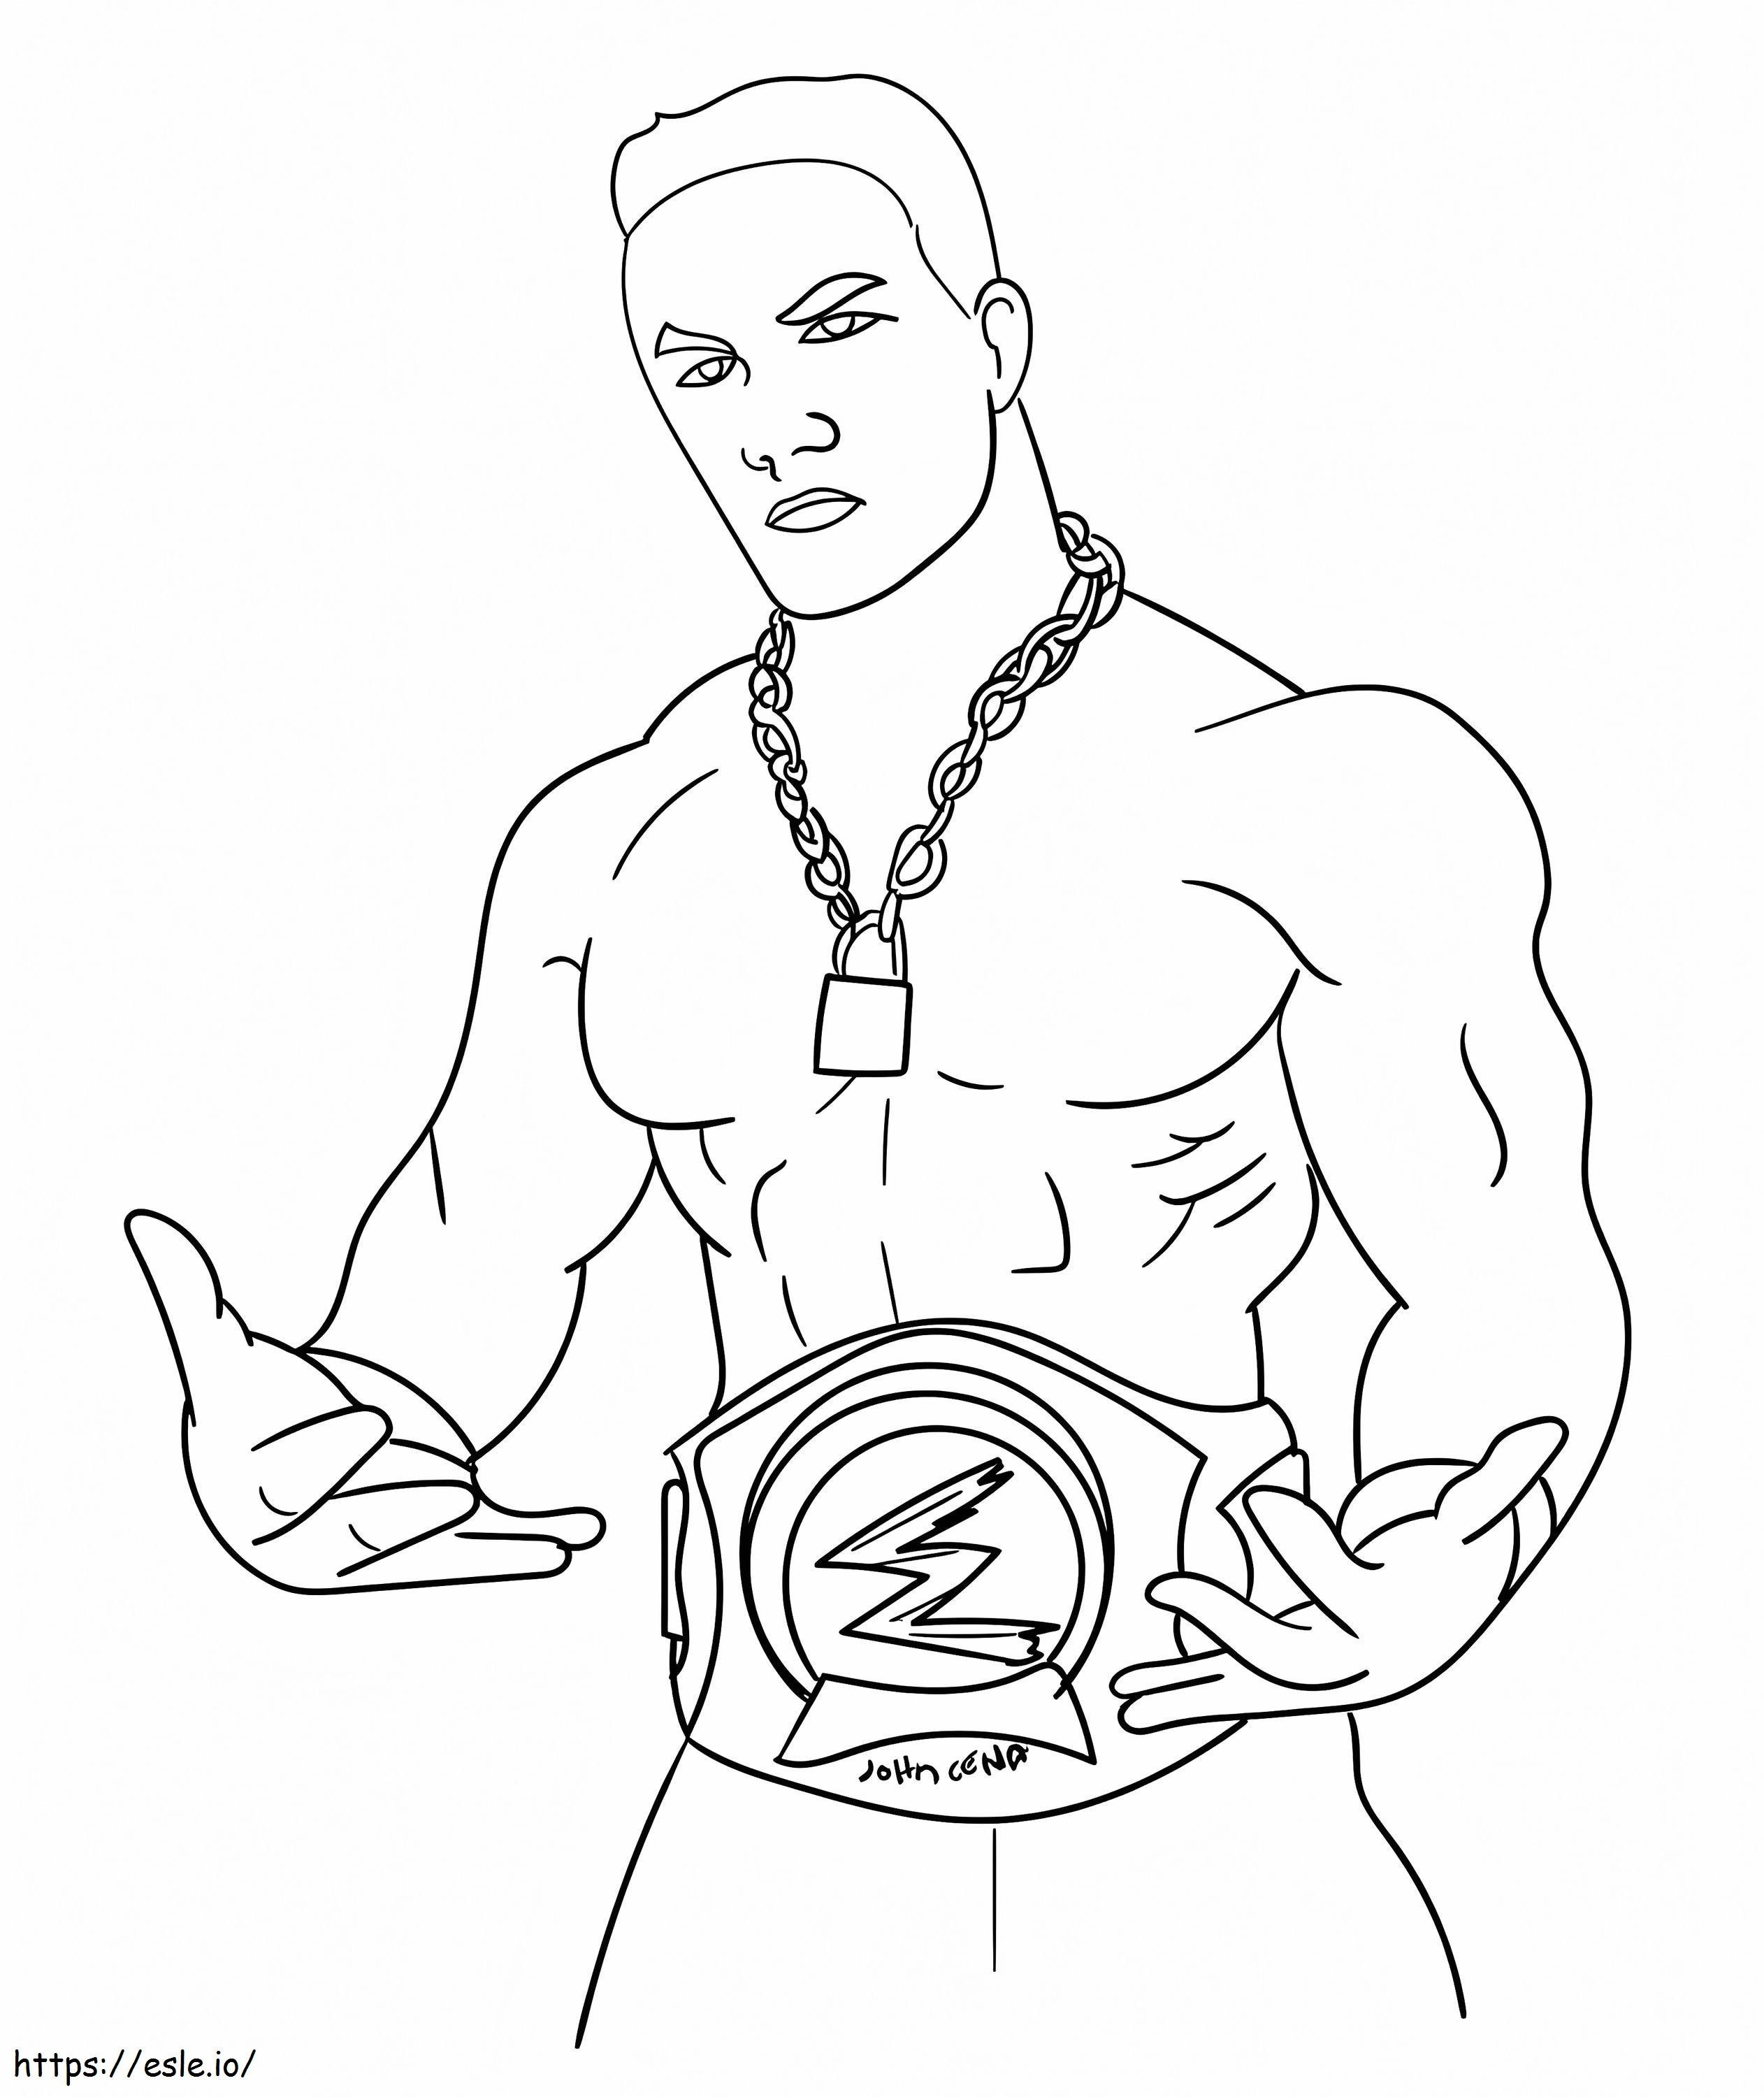 Free Printable John Cena coloring page